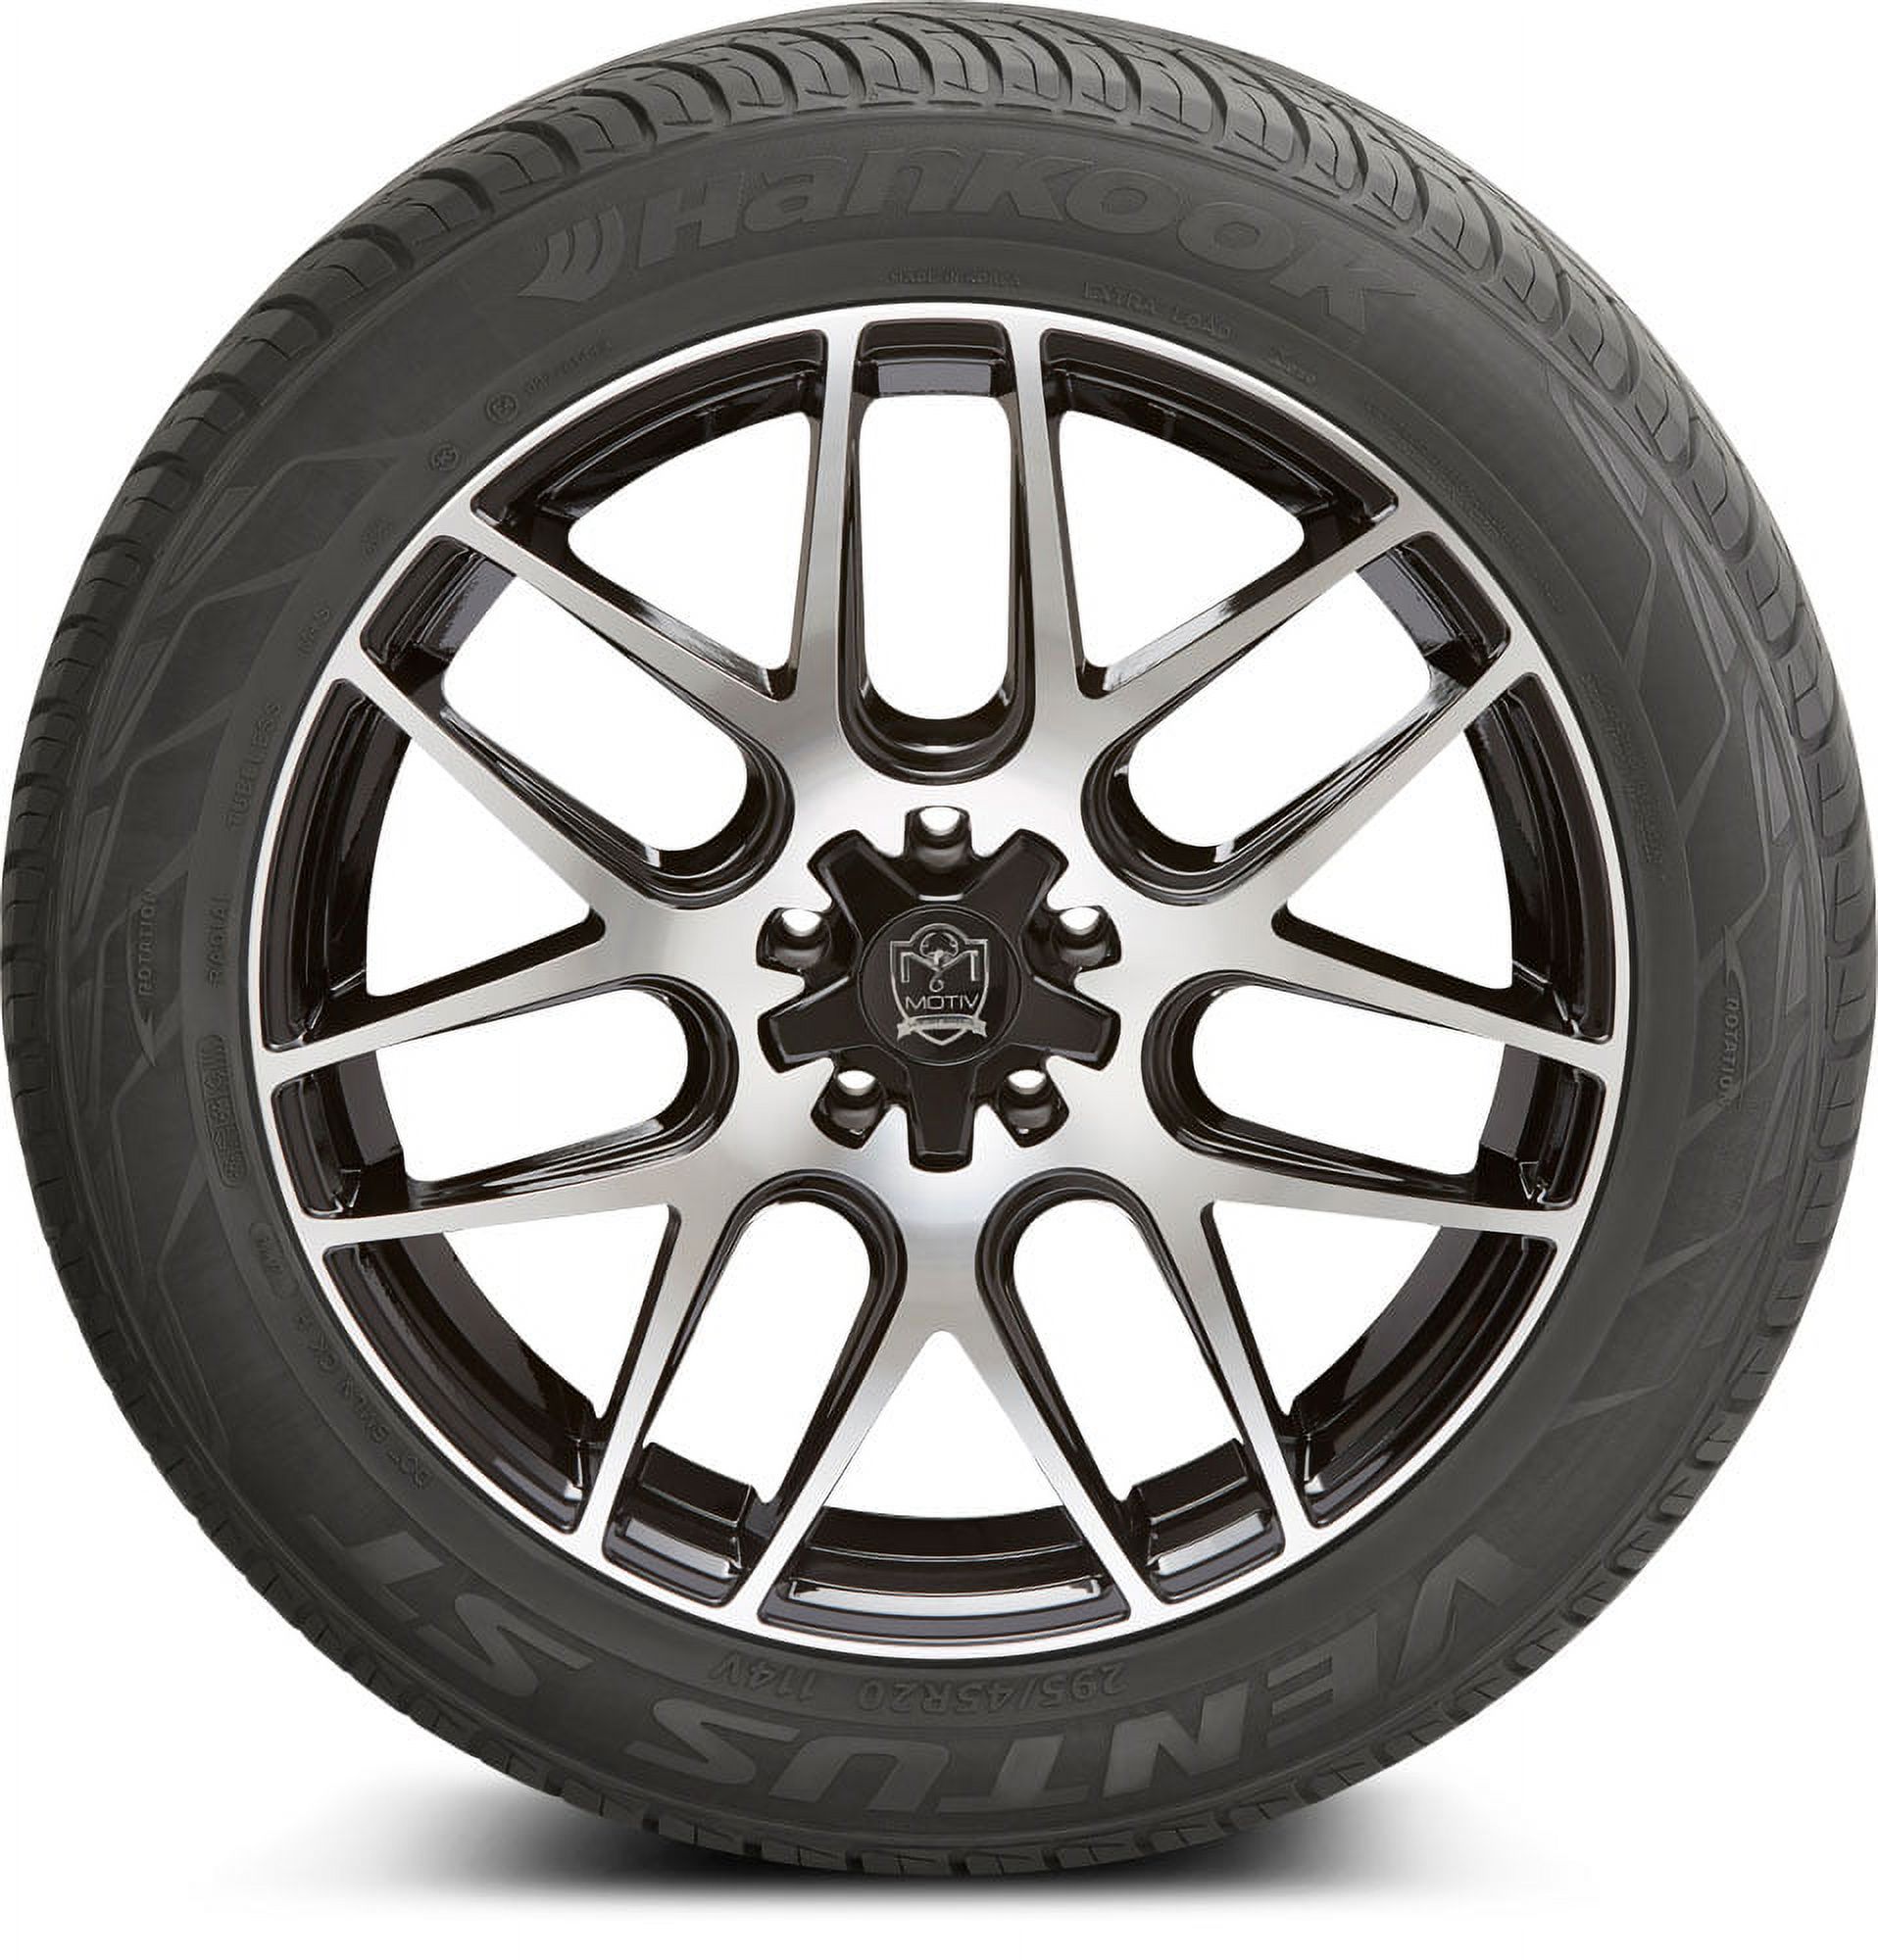 Hankook Ventus ST (RH06) All Season 275/40R20 106W XL SUV/Crossover Tire - image 2 of 3